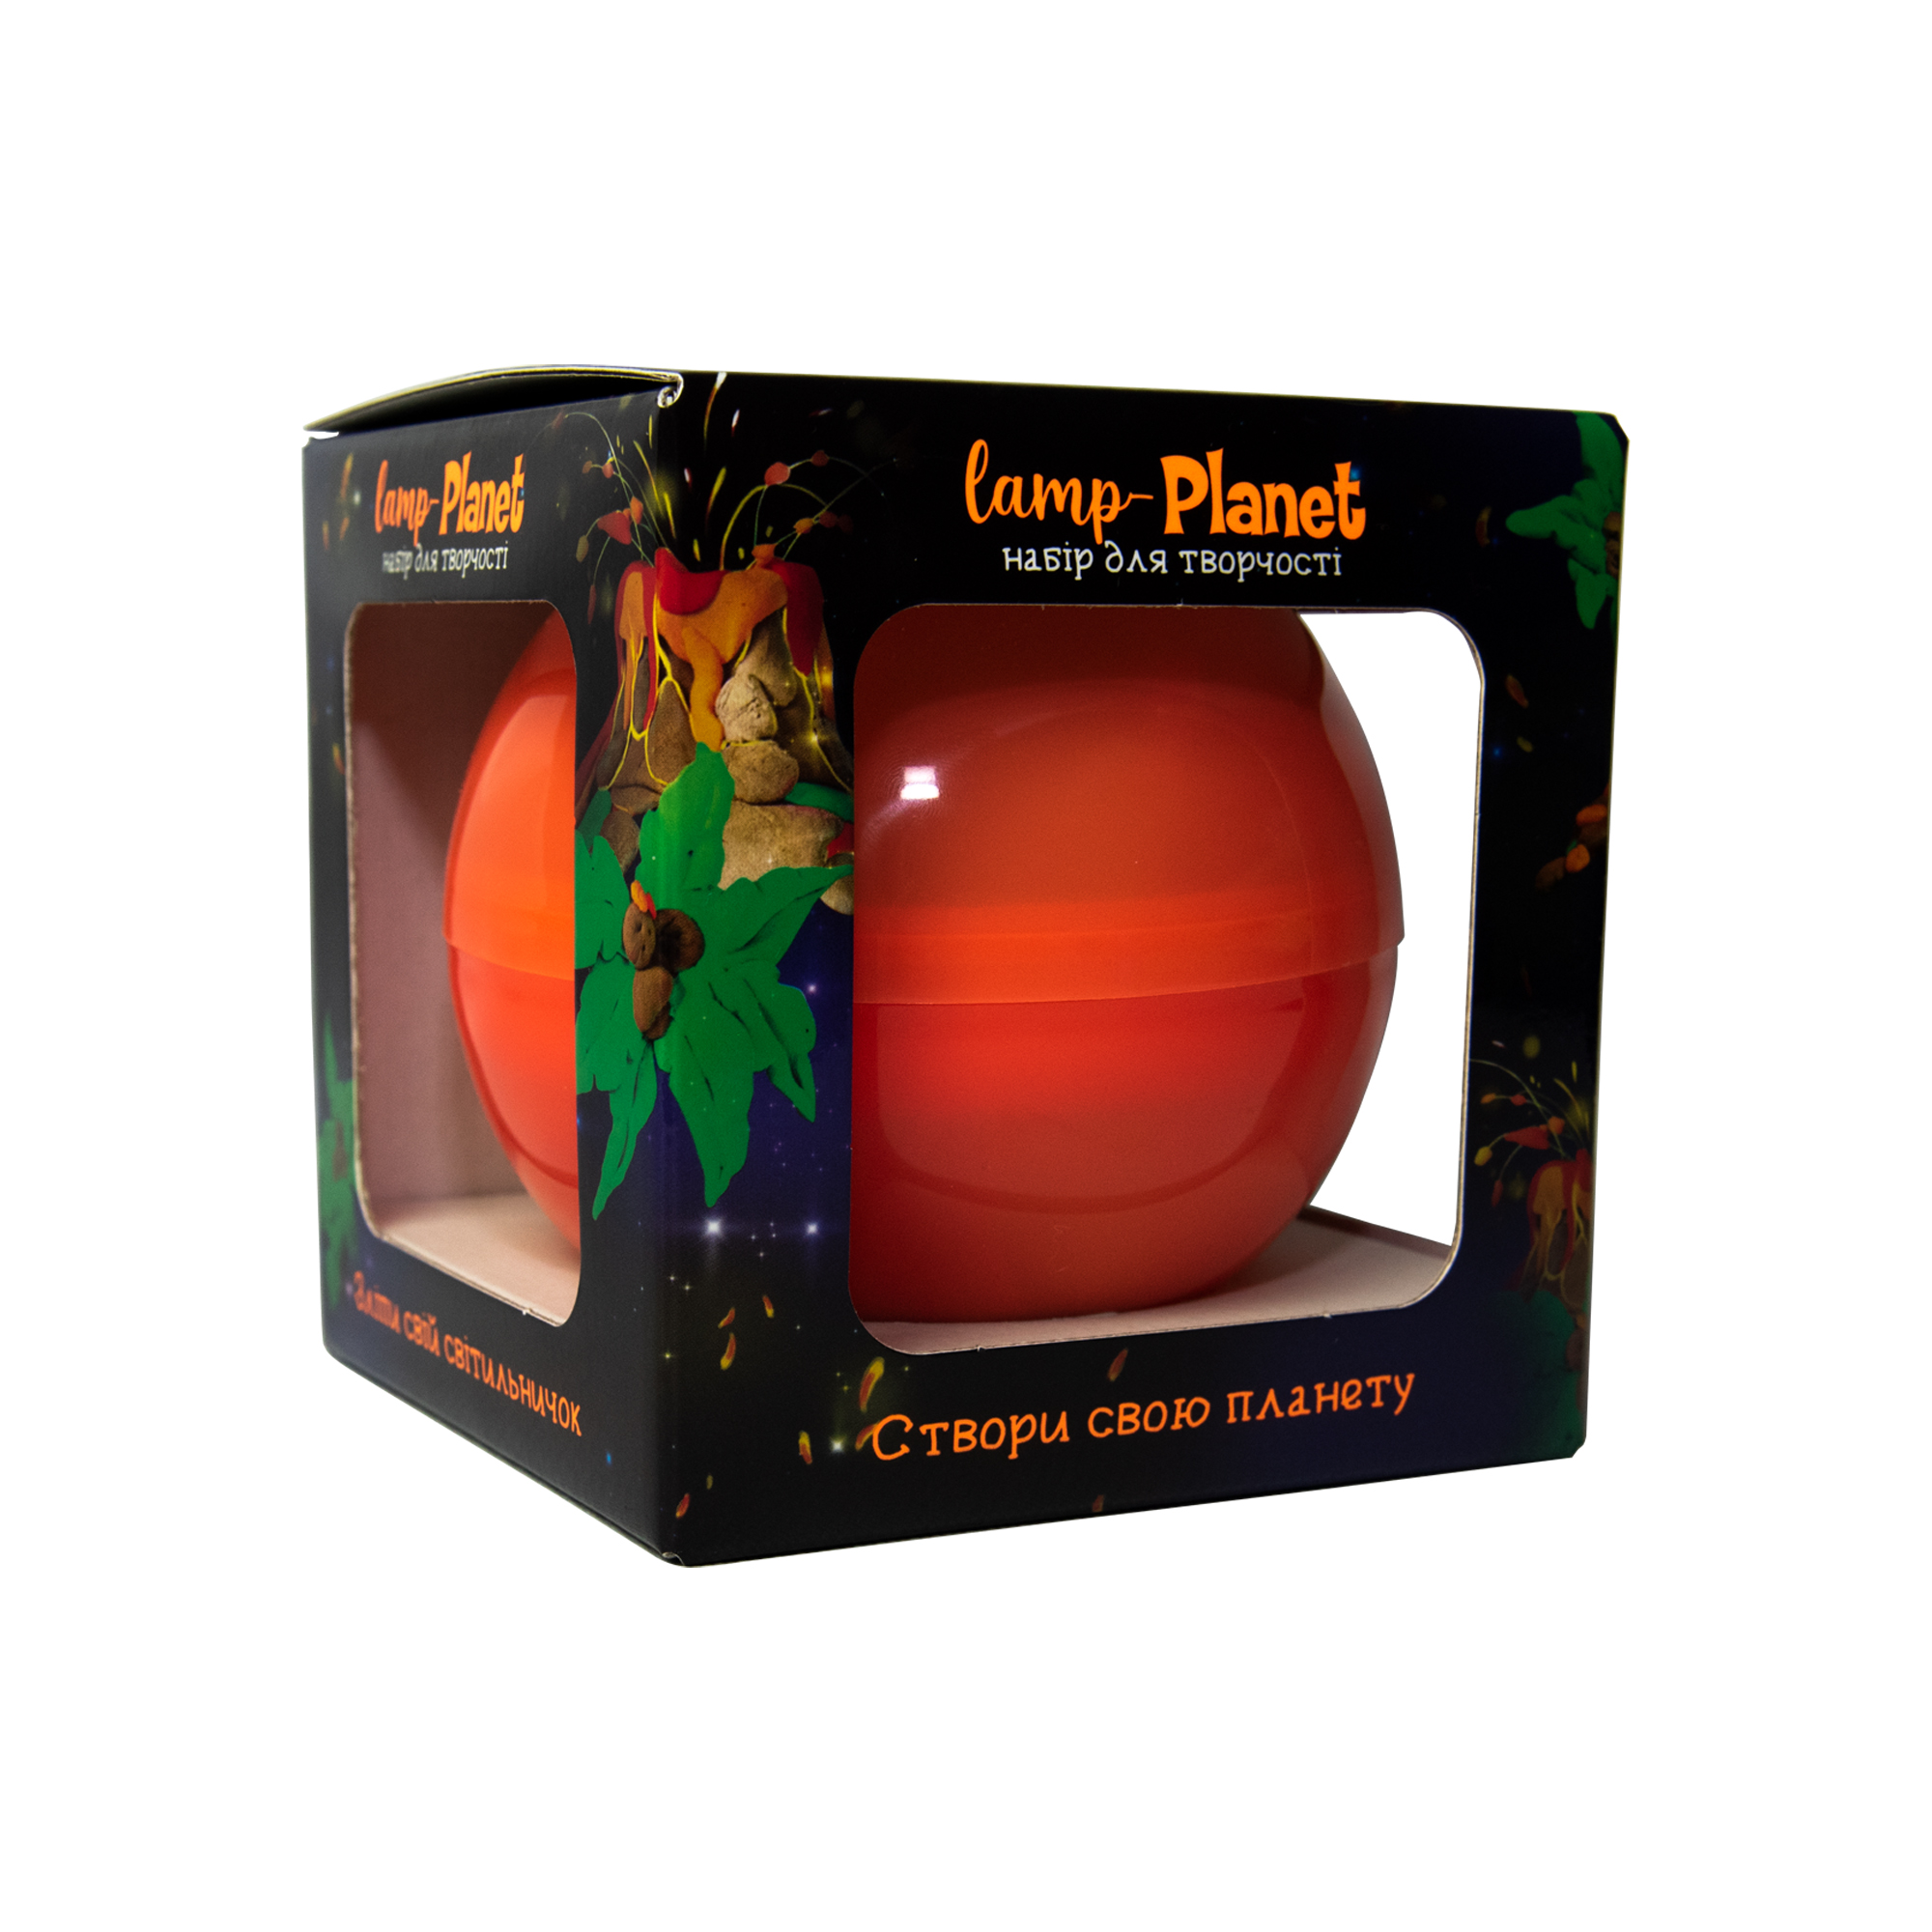 Lamp-planet orange